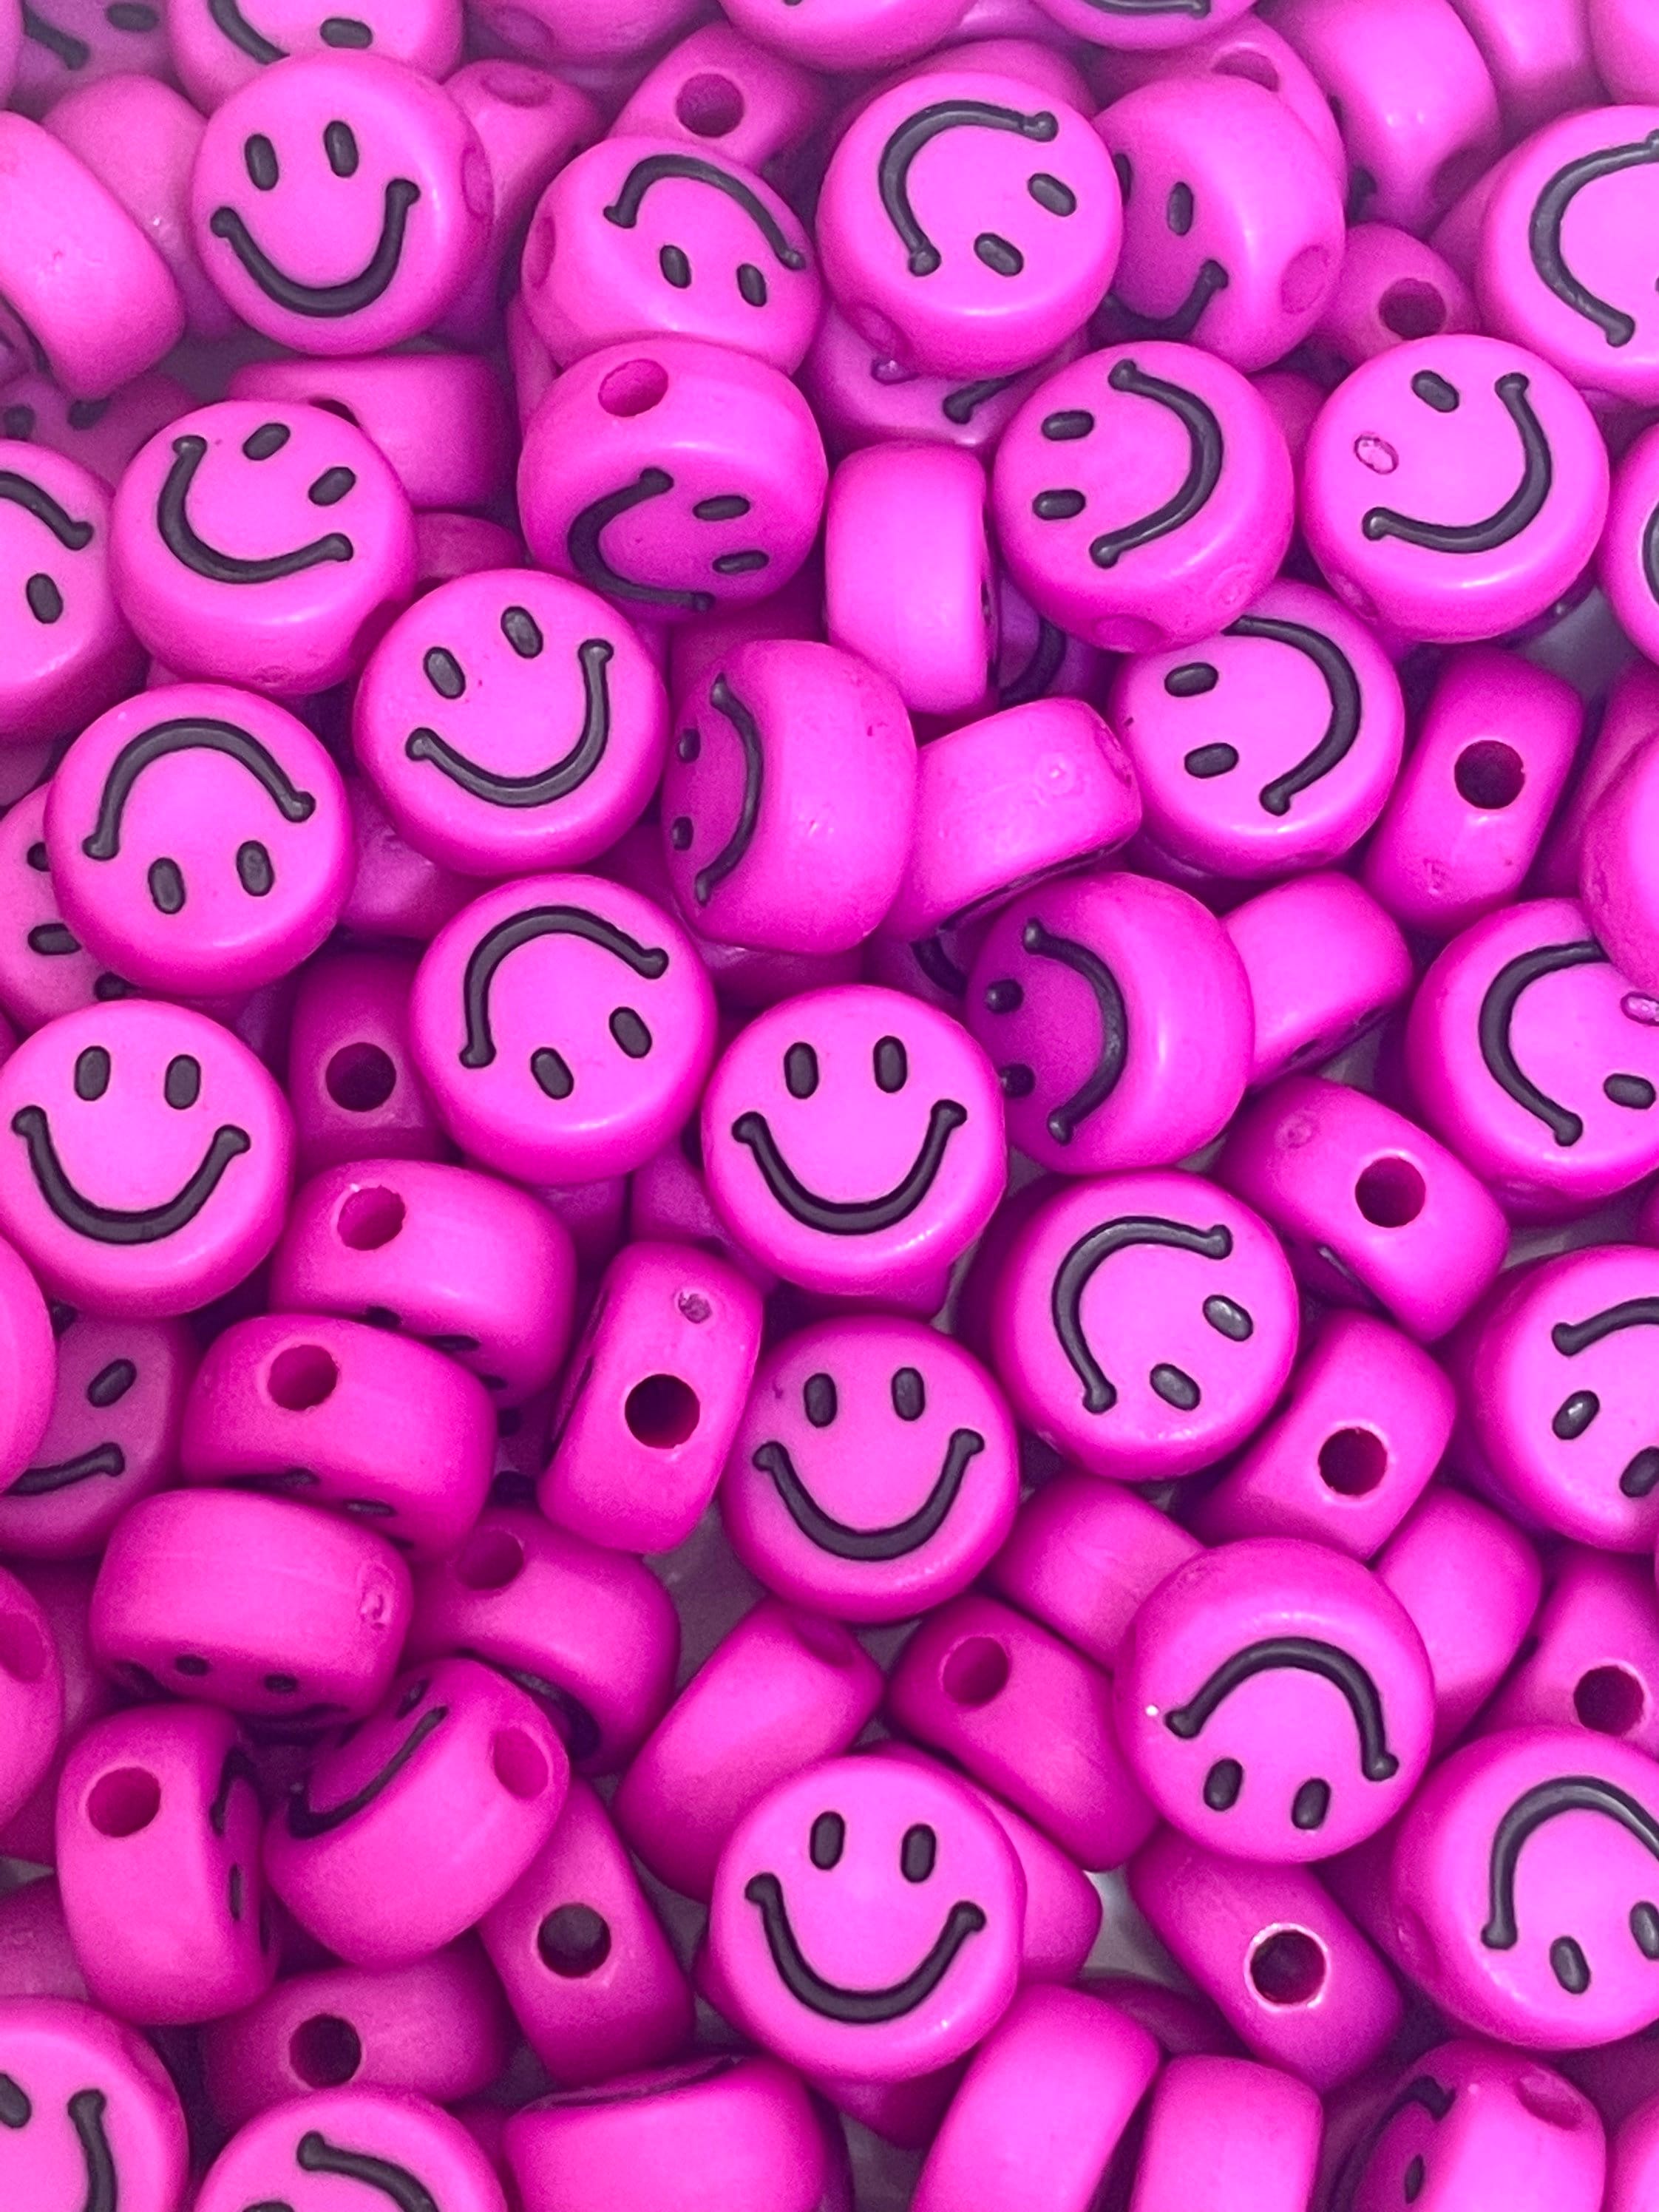 Smiley Beads Emoji Flower Pink Purple Beads for Jewelry Making 20 pcs Mix